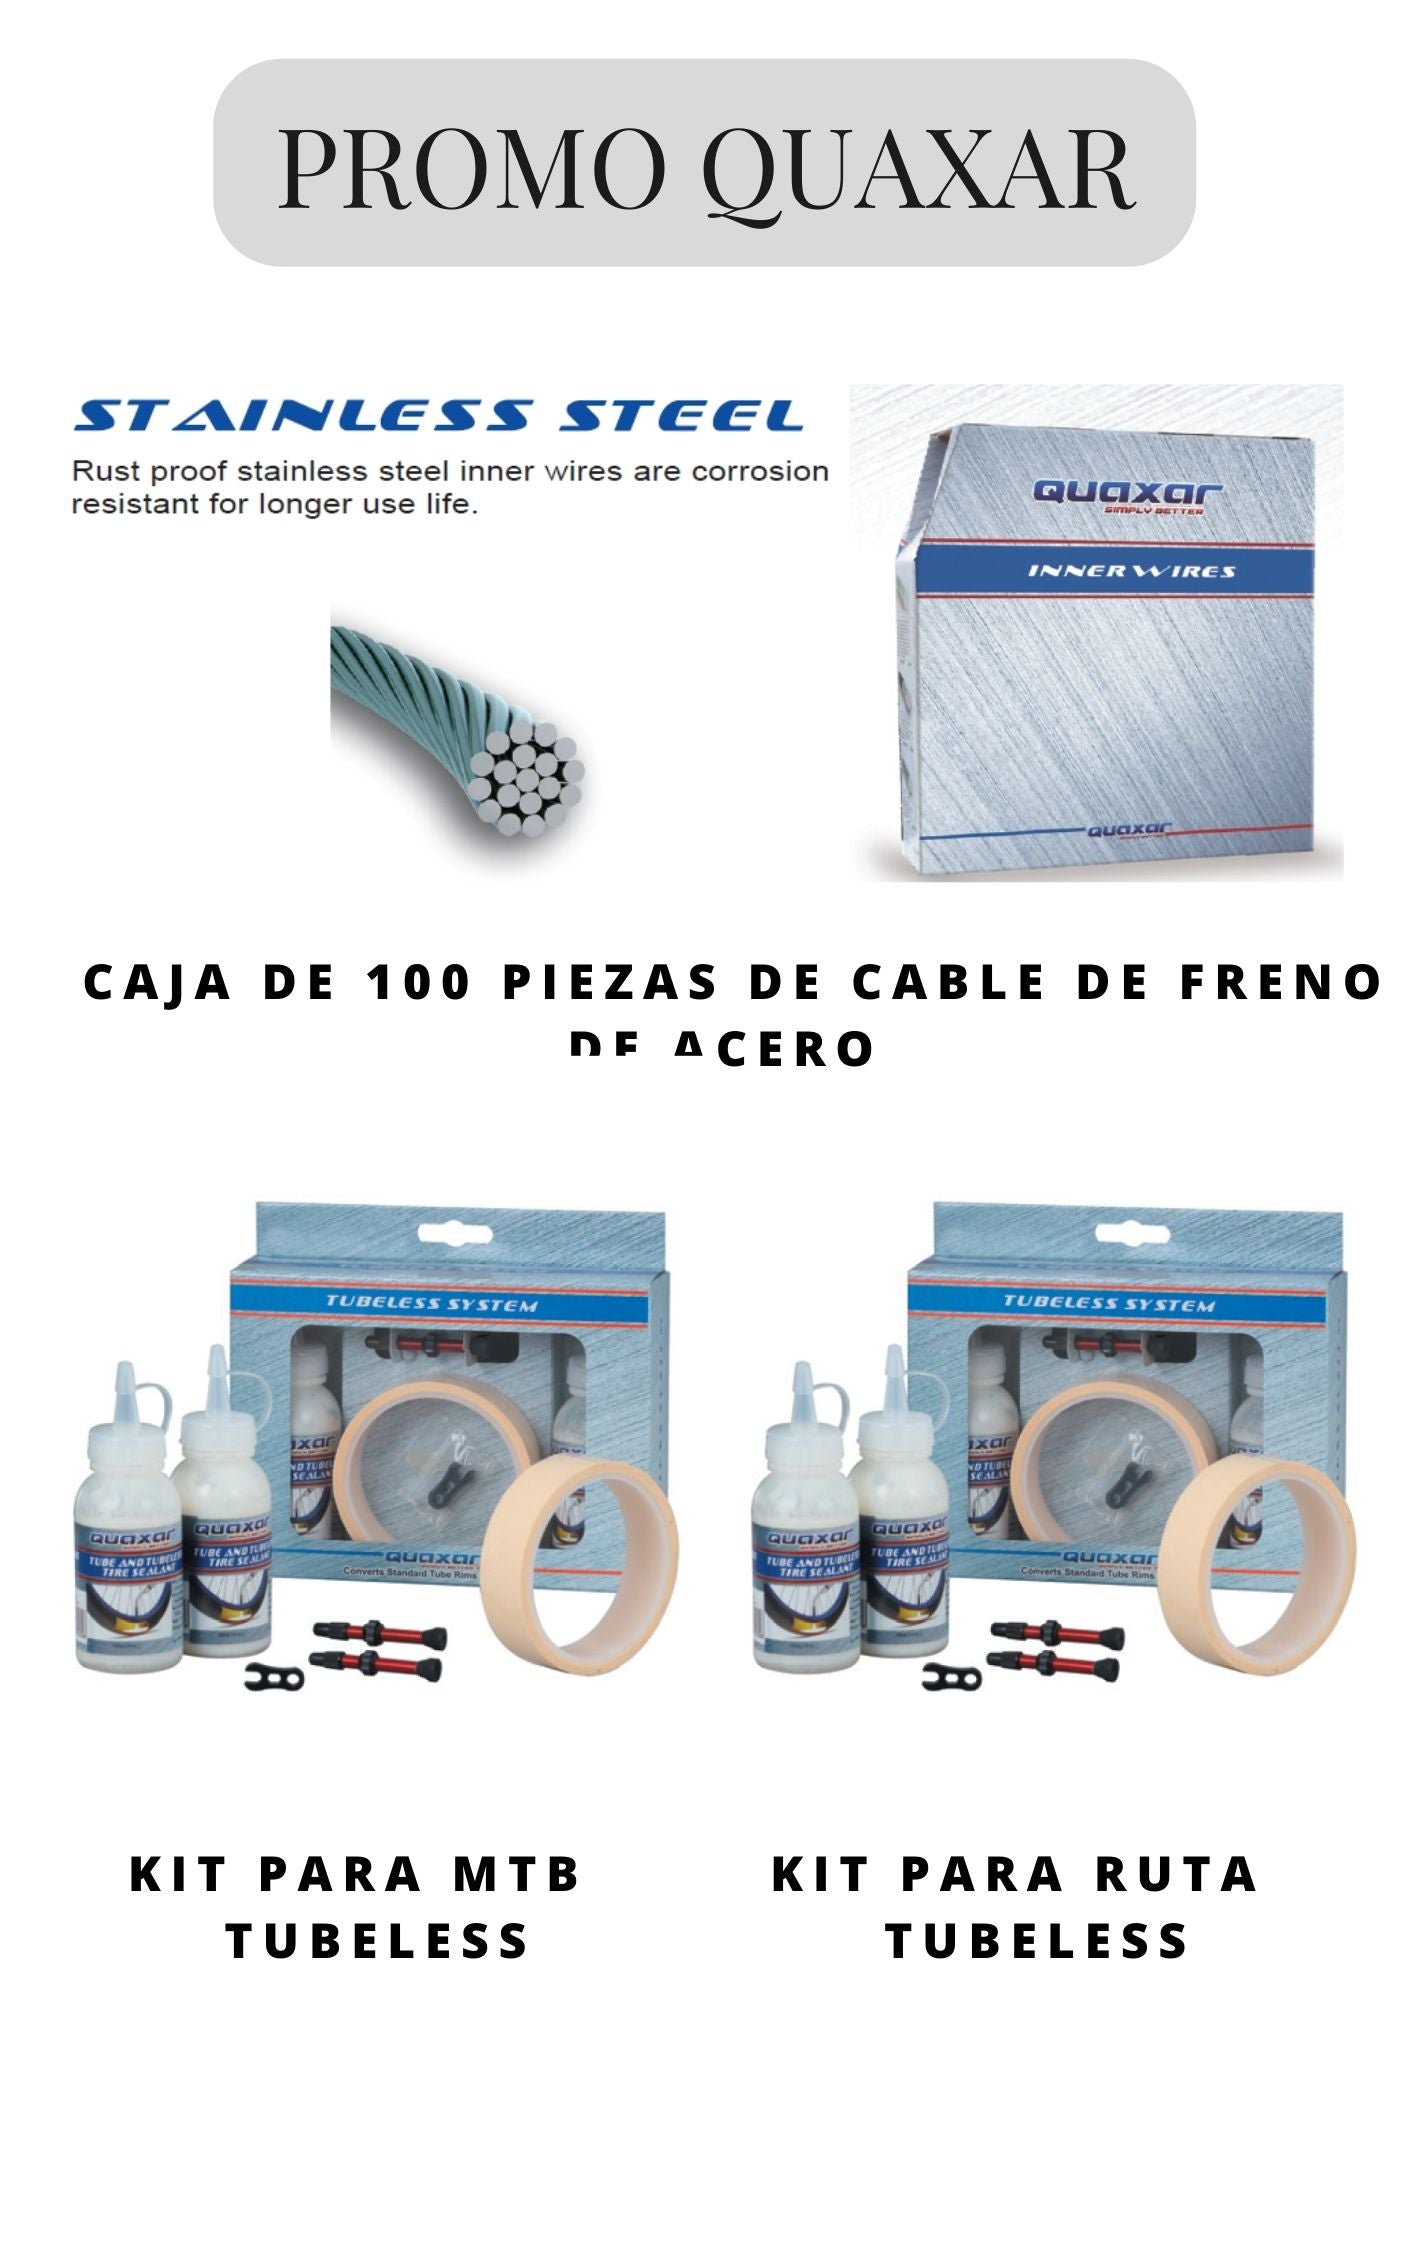 3 Productos Quaxar Cables de freno y kit Tubeless